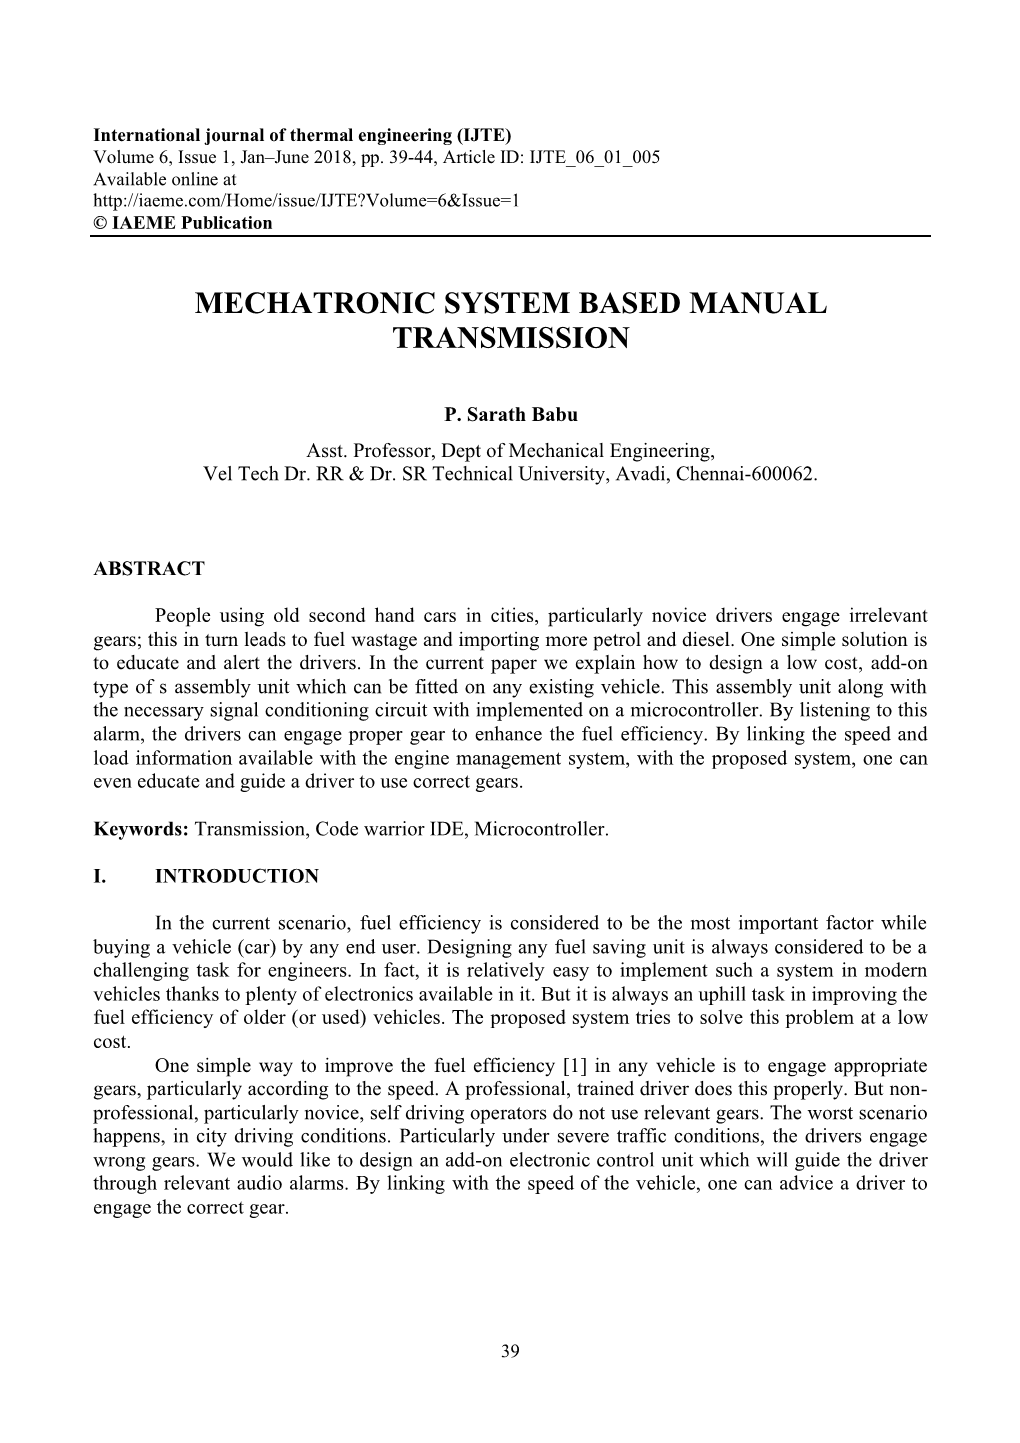 Mechatronic System Based Manual Transmission